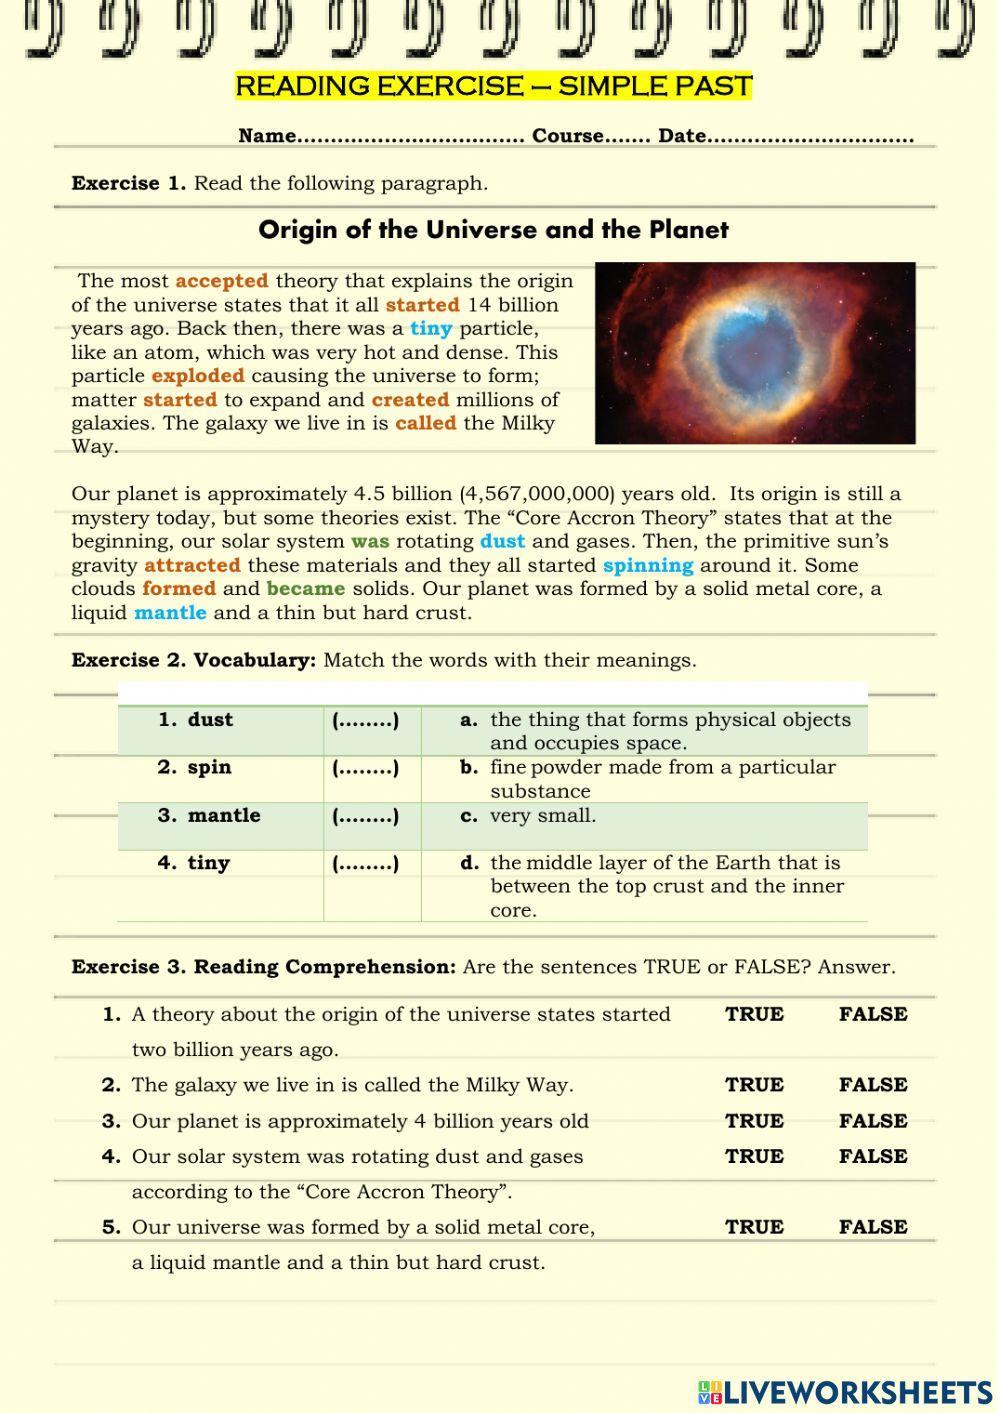 Reading: Origin of the Universe